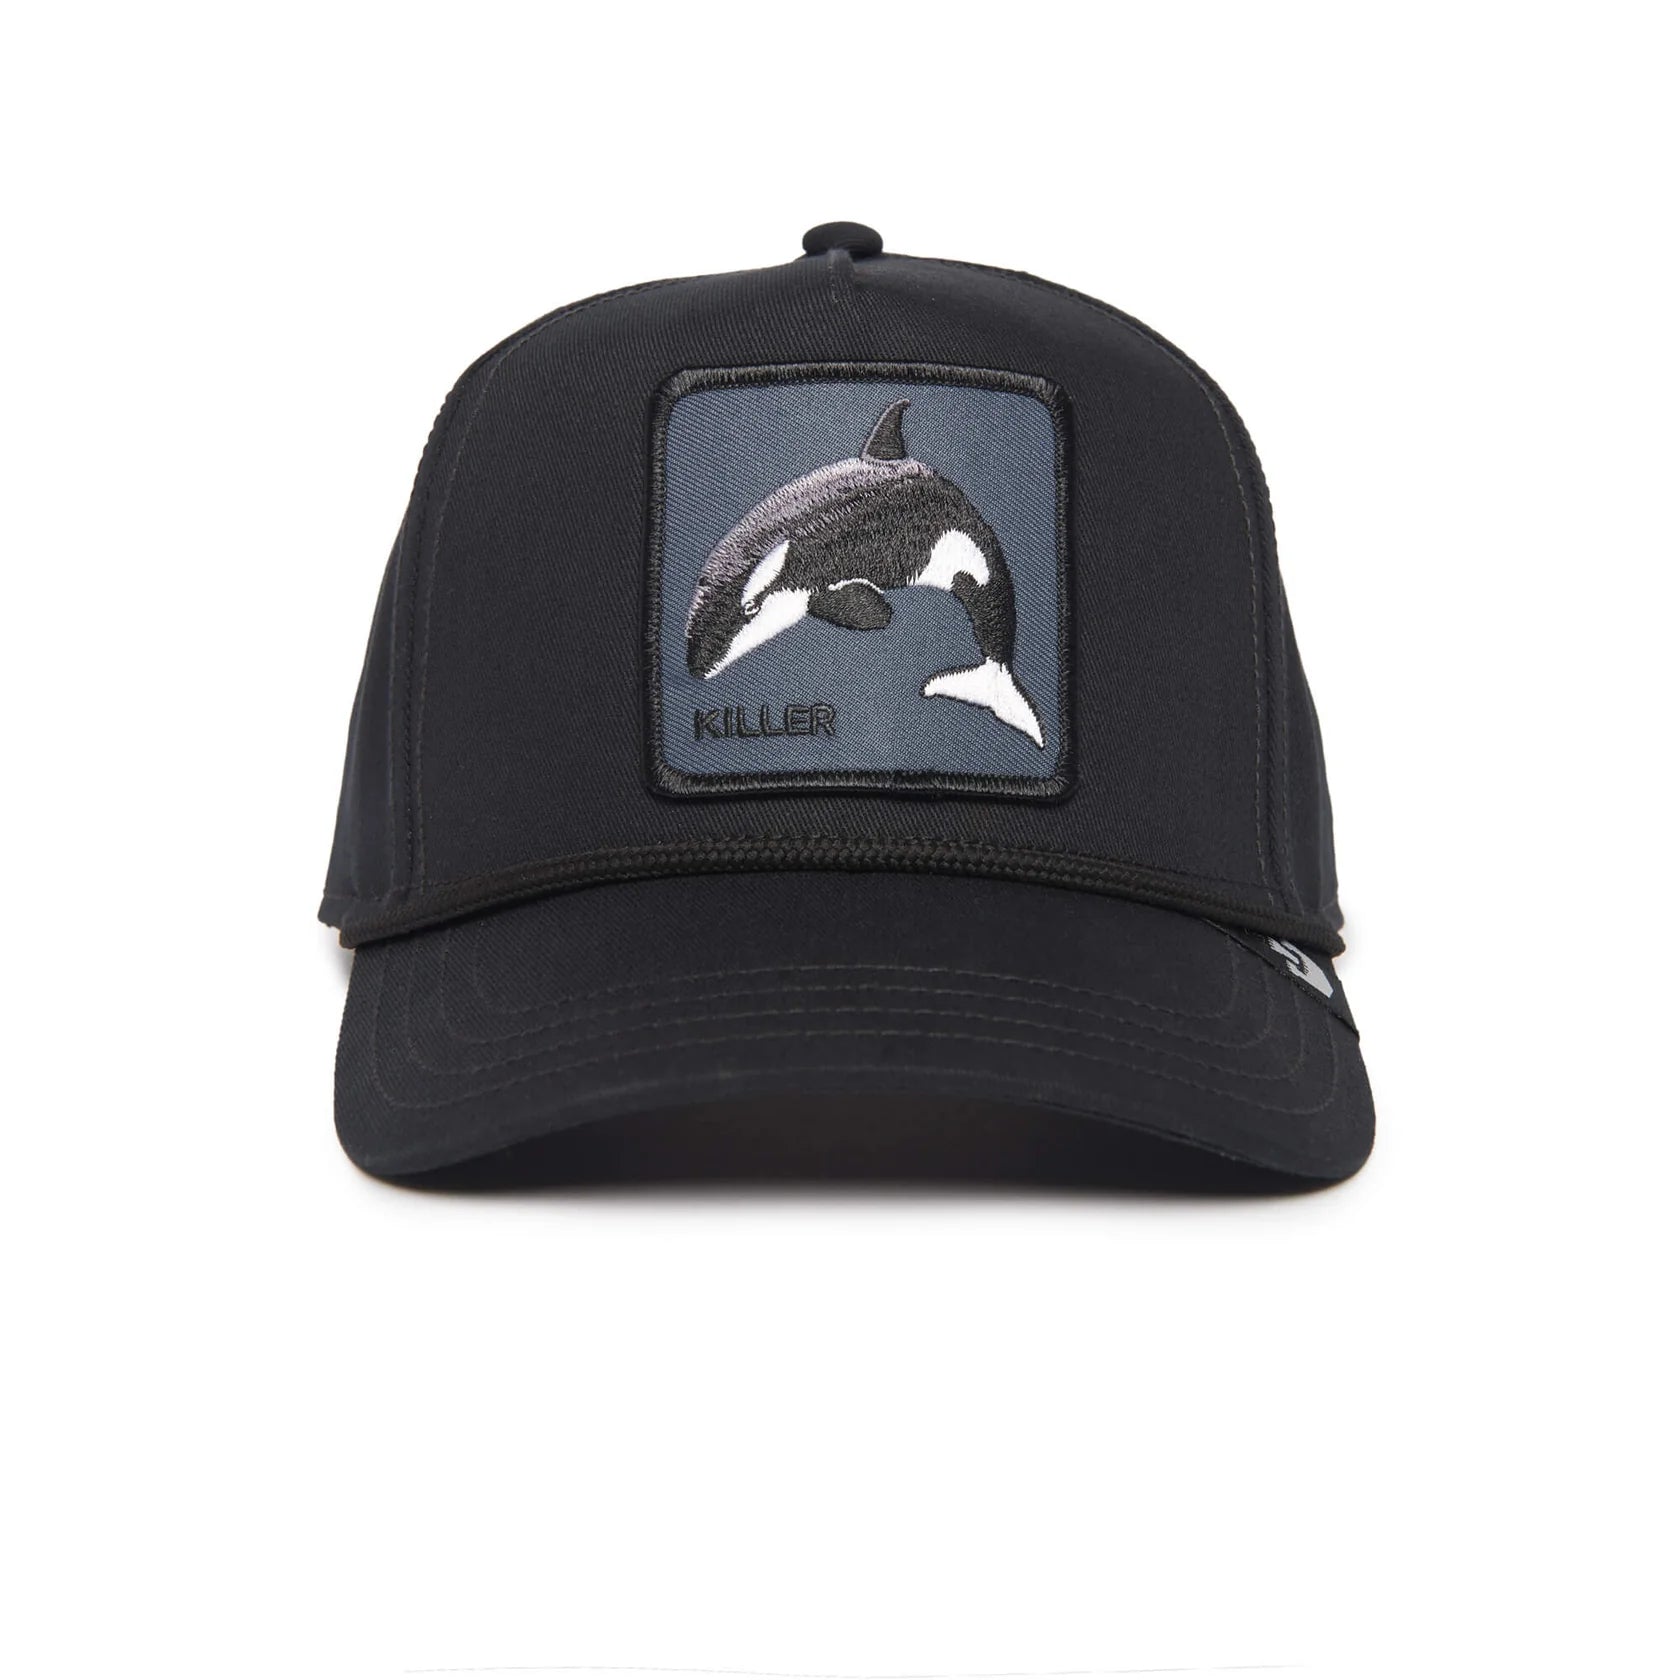 'Goorin Bros. Killer Whale Baseball Cap' in 'Black' colour